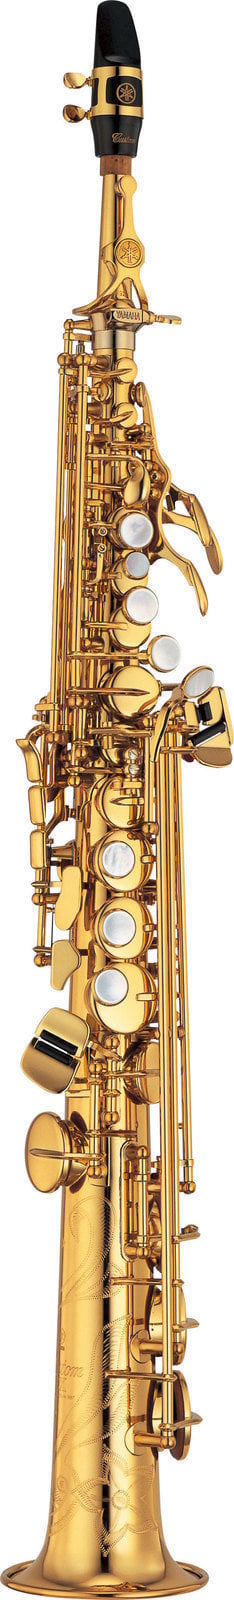 Saxophones sopranos Yamaha YSS-875EXGP 02 Saxophones sopranos